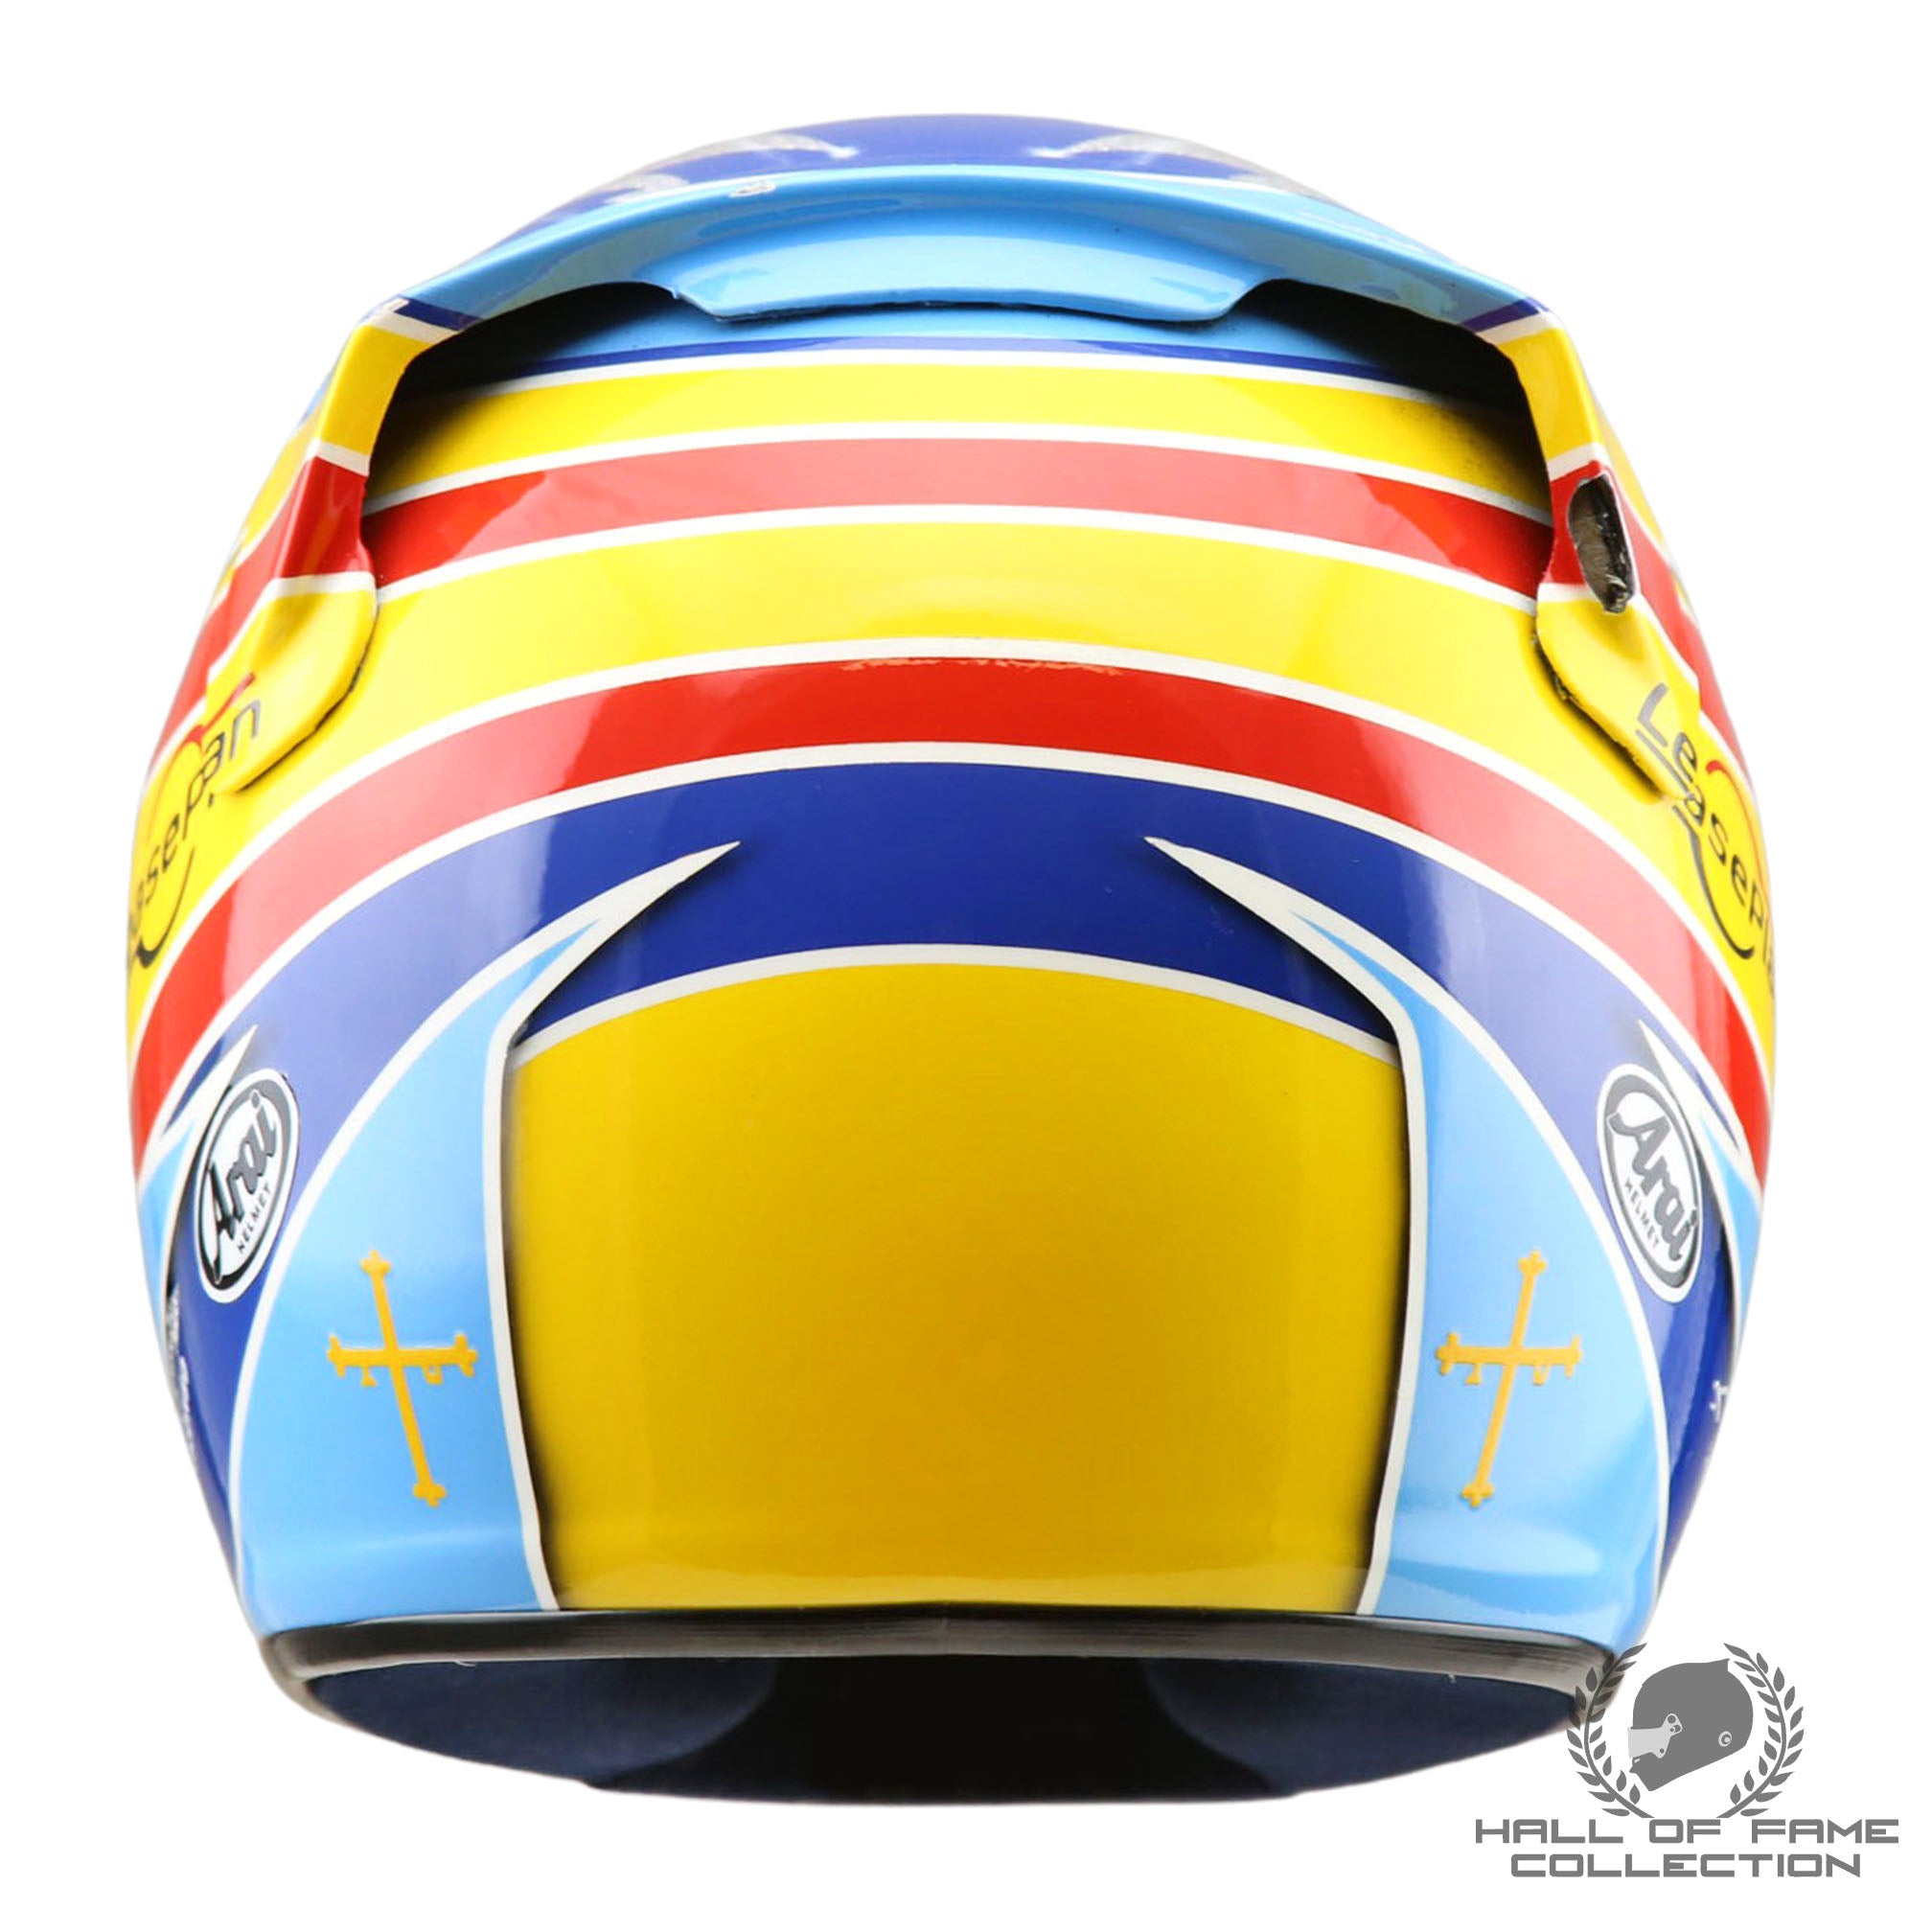 2002 Fernando Alonso Signed Used Mild Seven Renault F1 Suit With Bonus Helmet